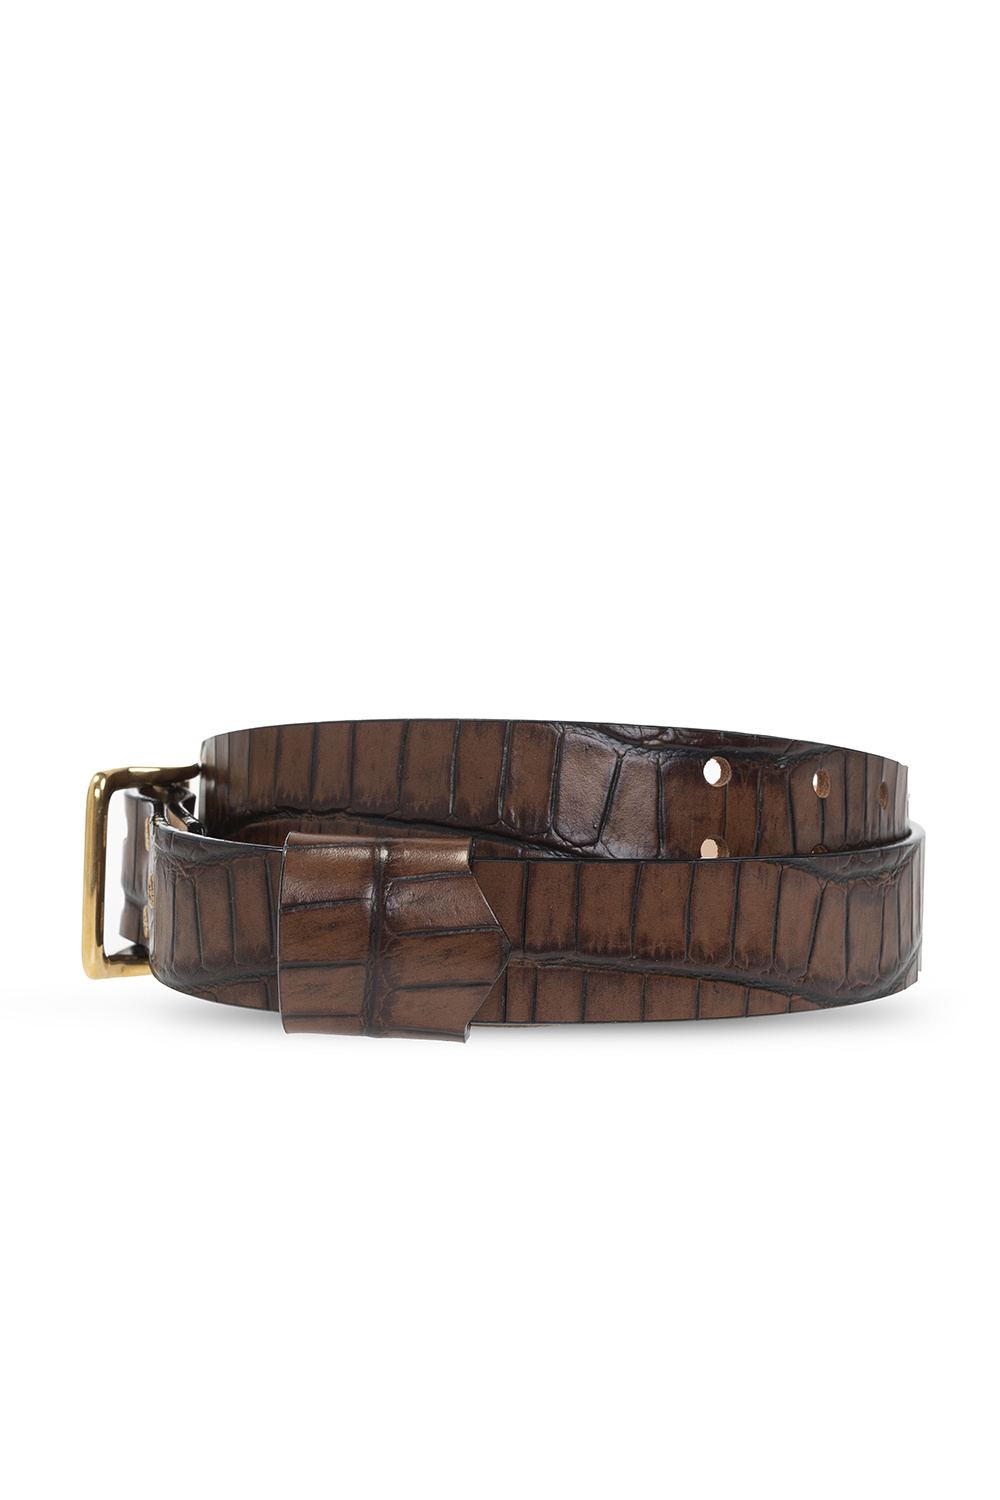 Chloé ‘Franckie’ leather belt